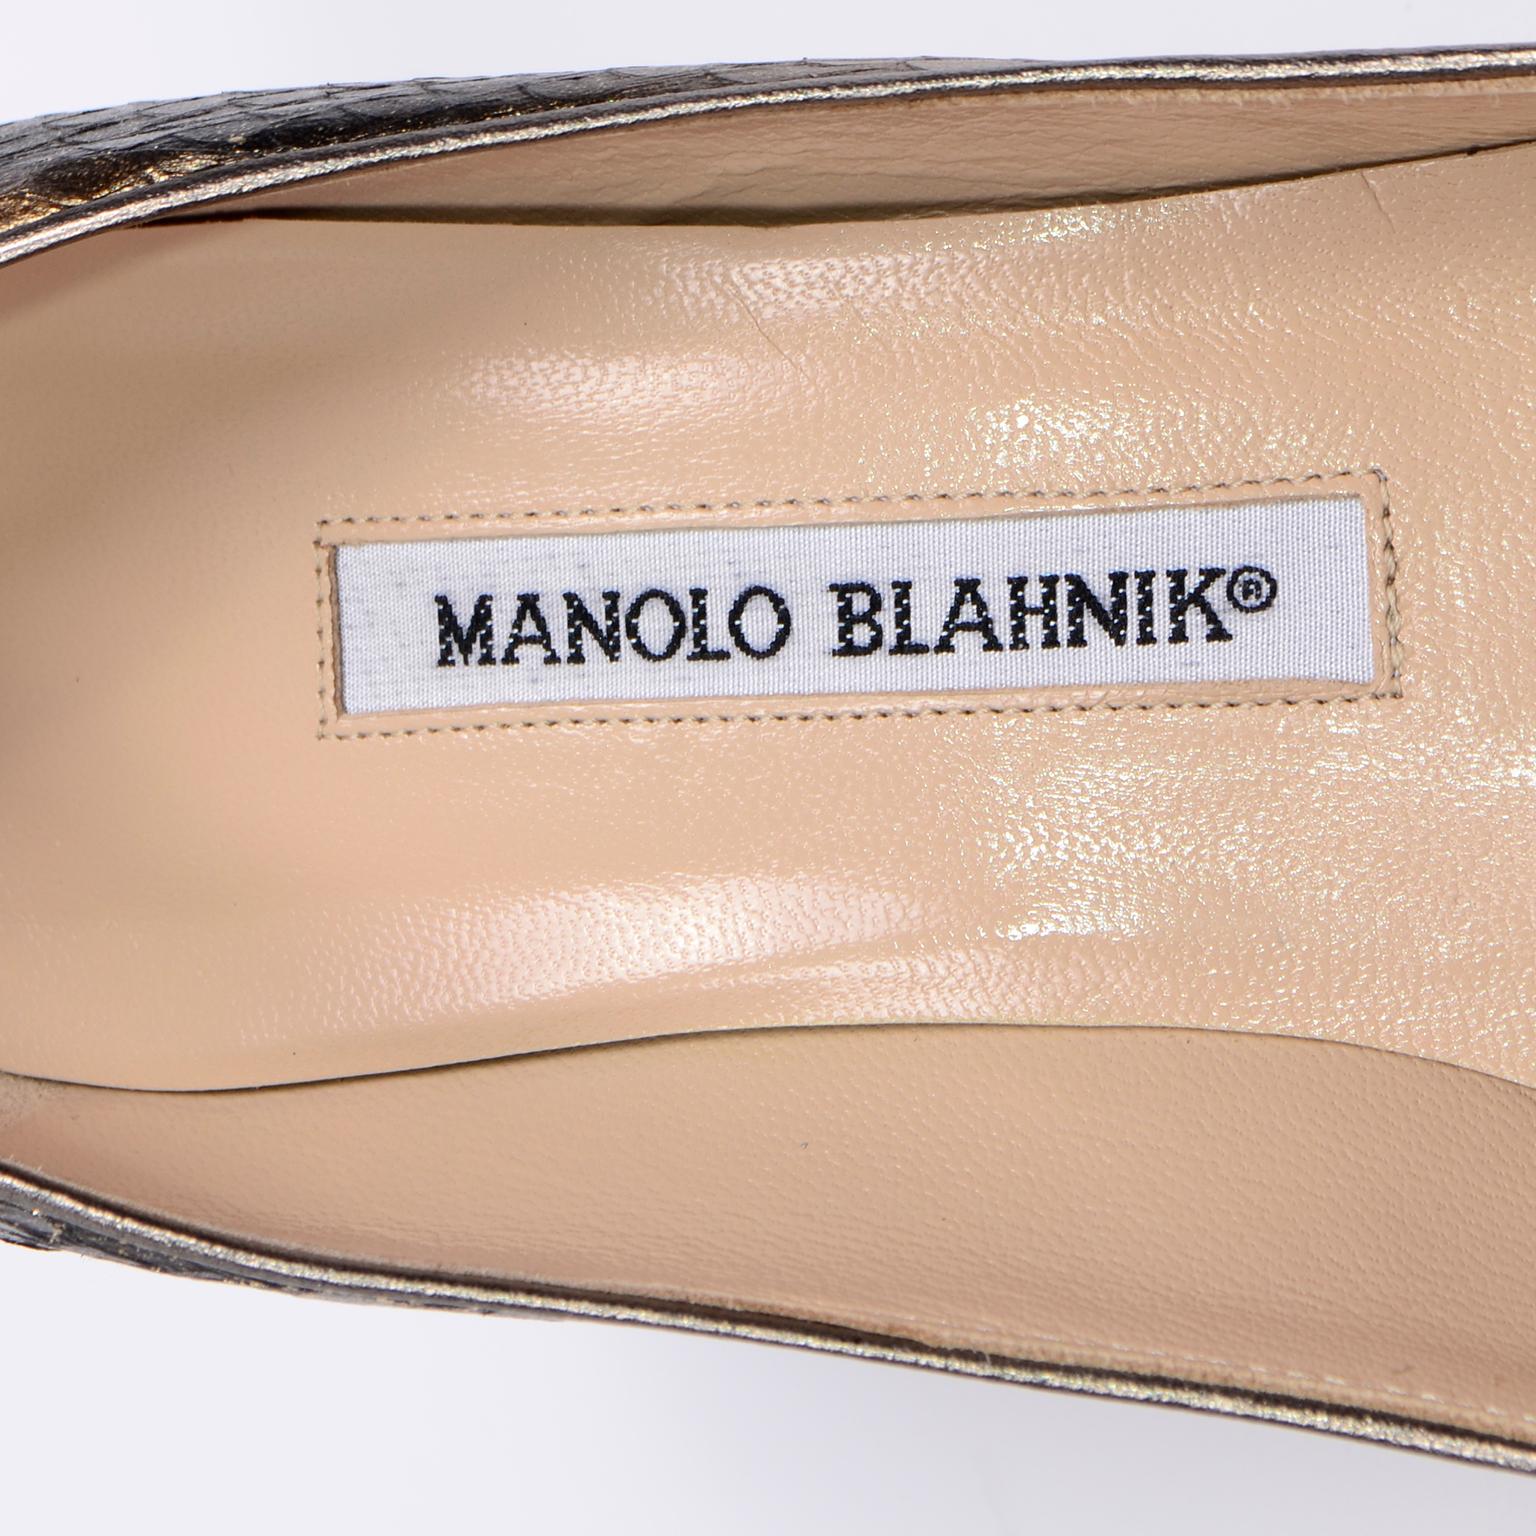 Manolo Blahnik Copper Rose Bronze Snakeskin Pumps With Heels & Pointed Toe 2